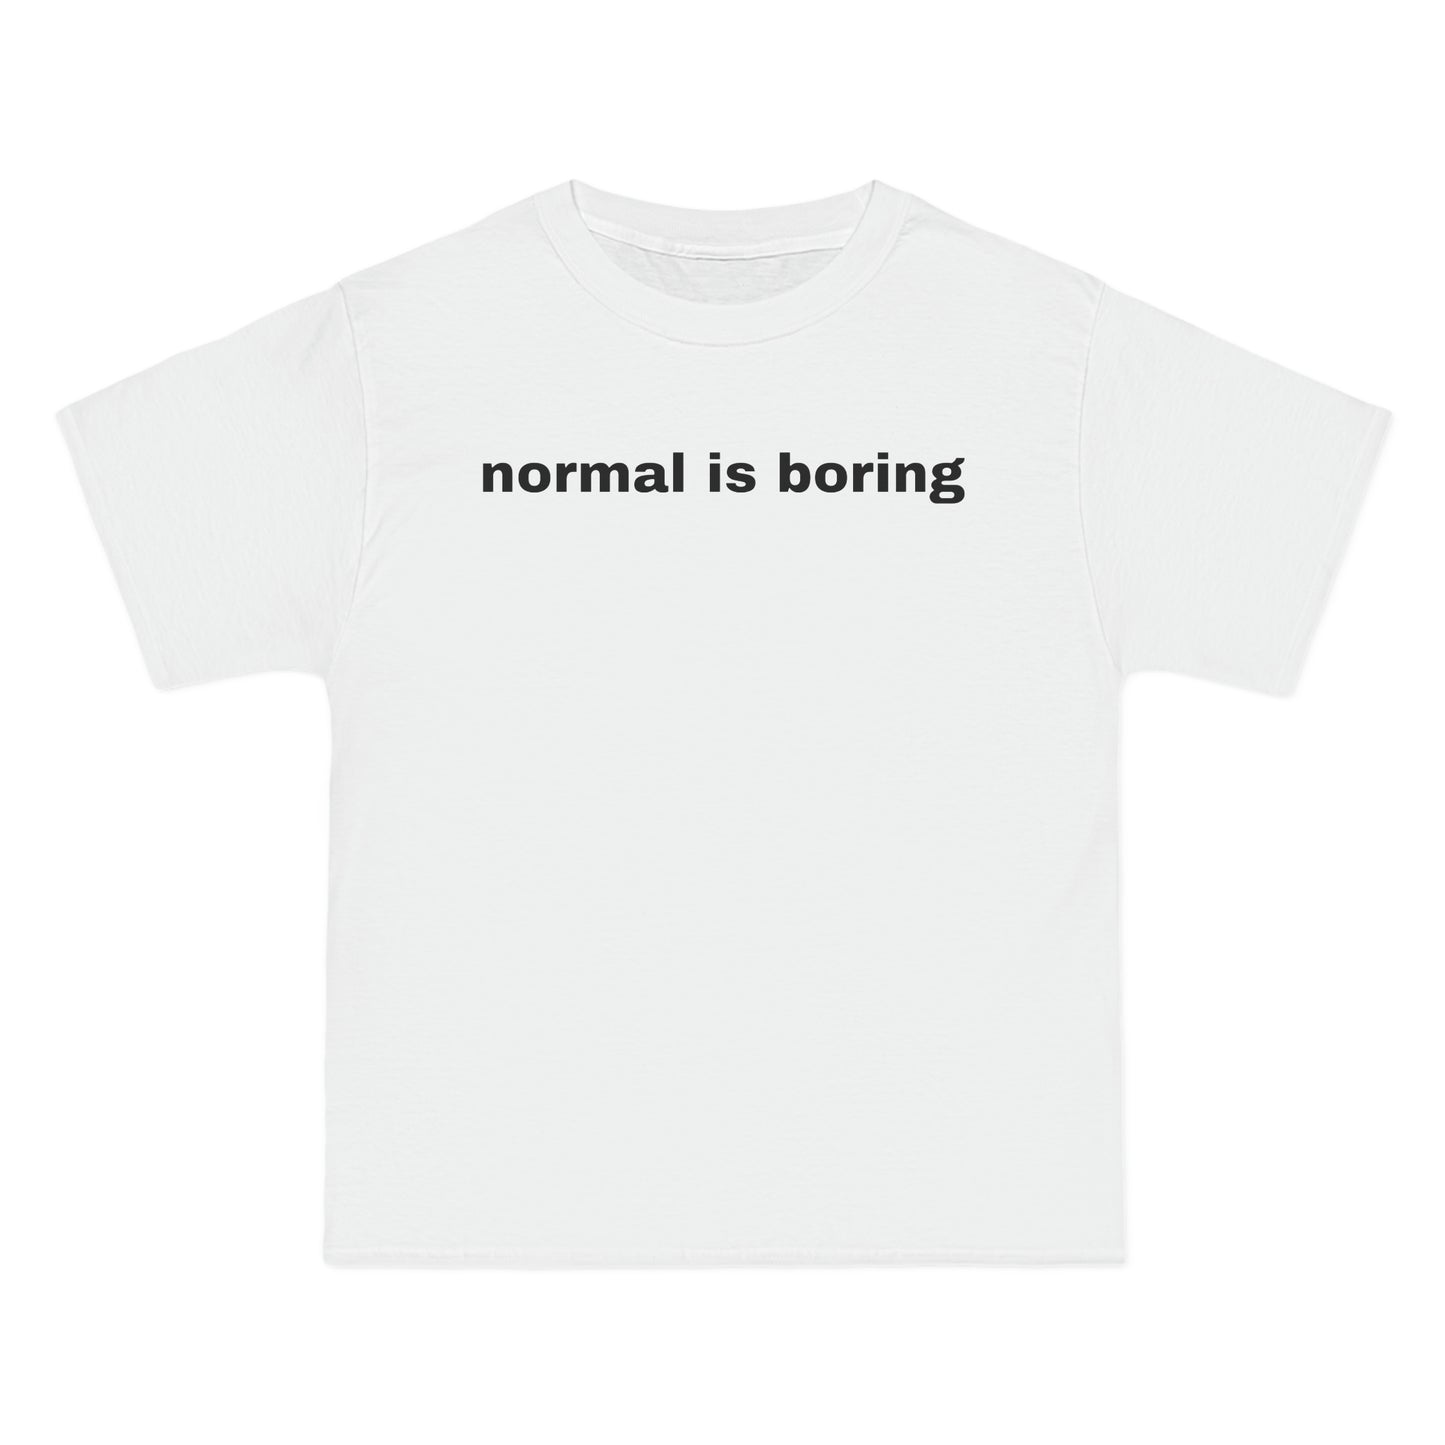 normal is boring Tee